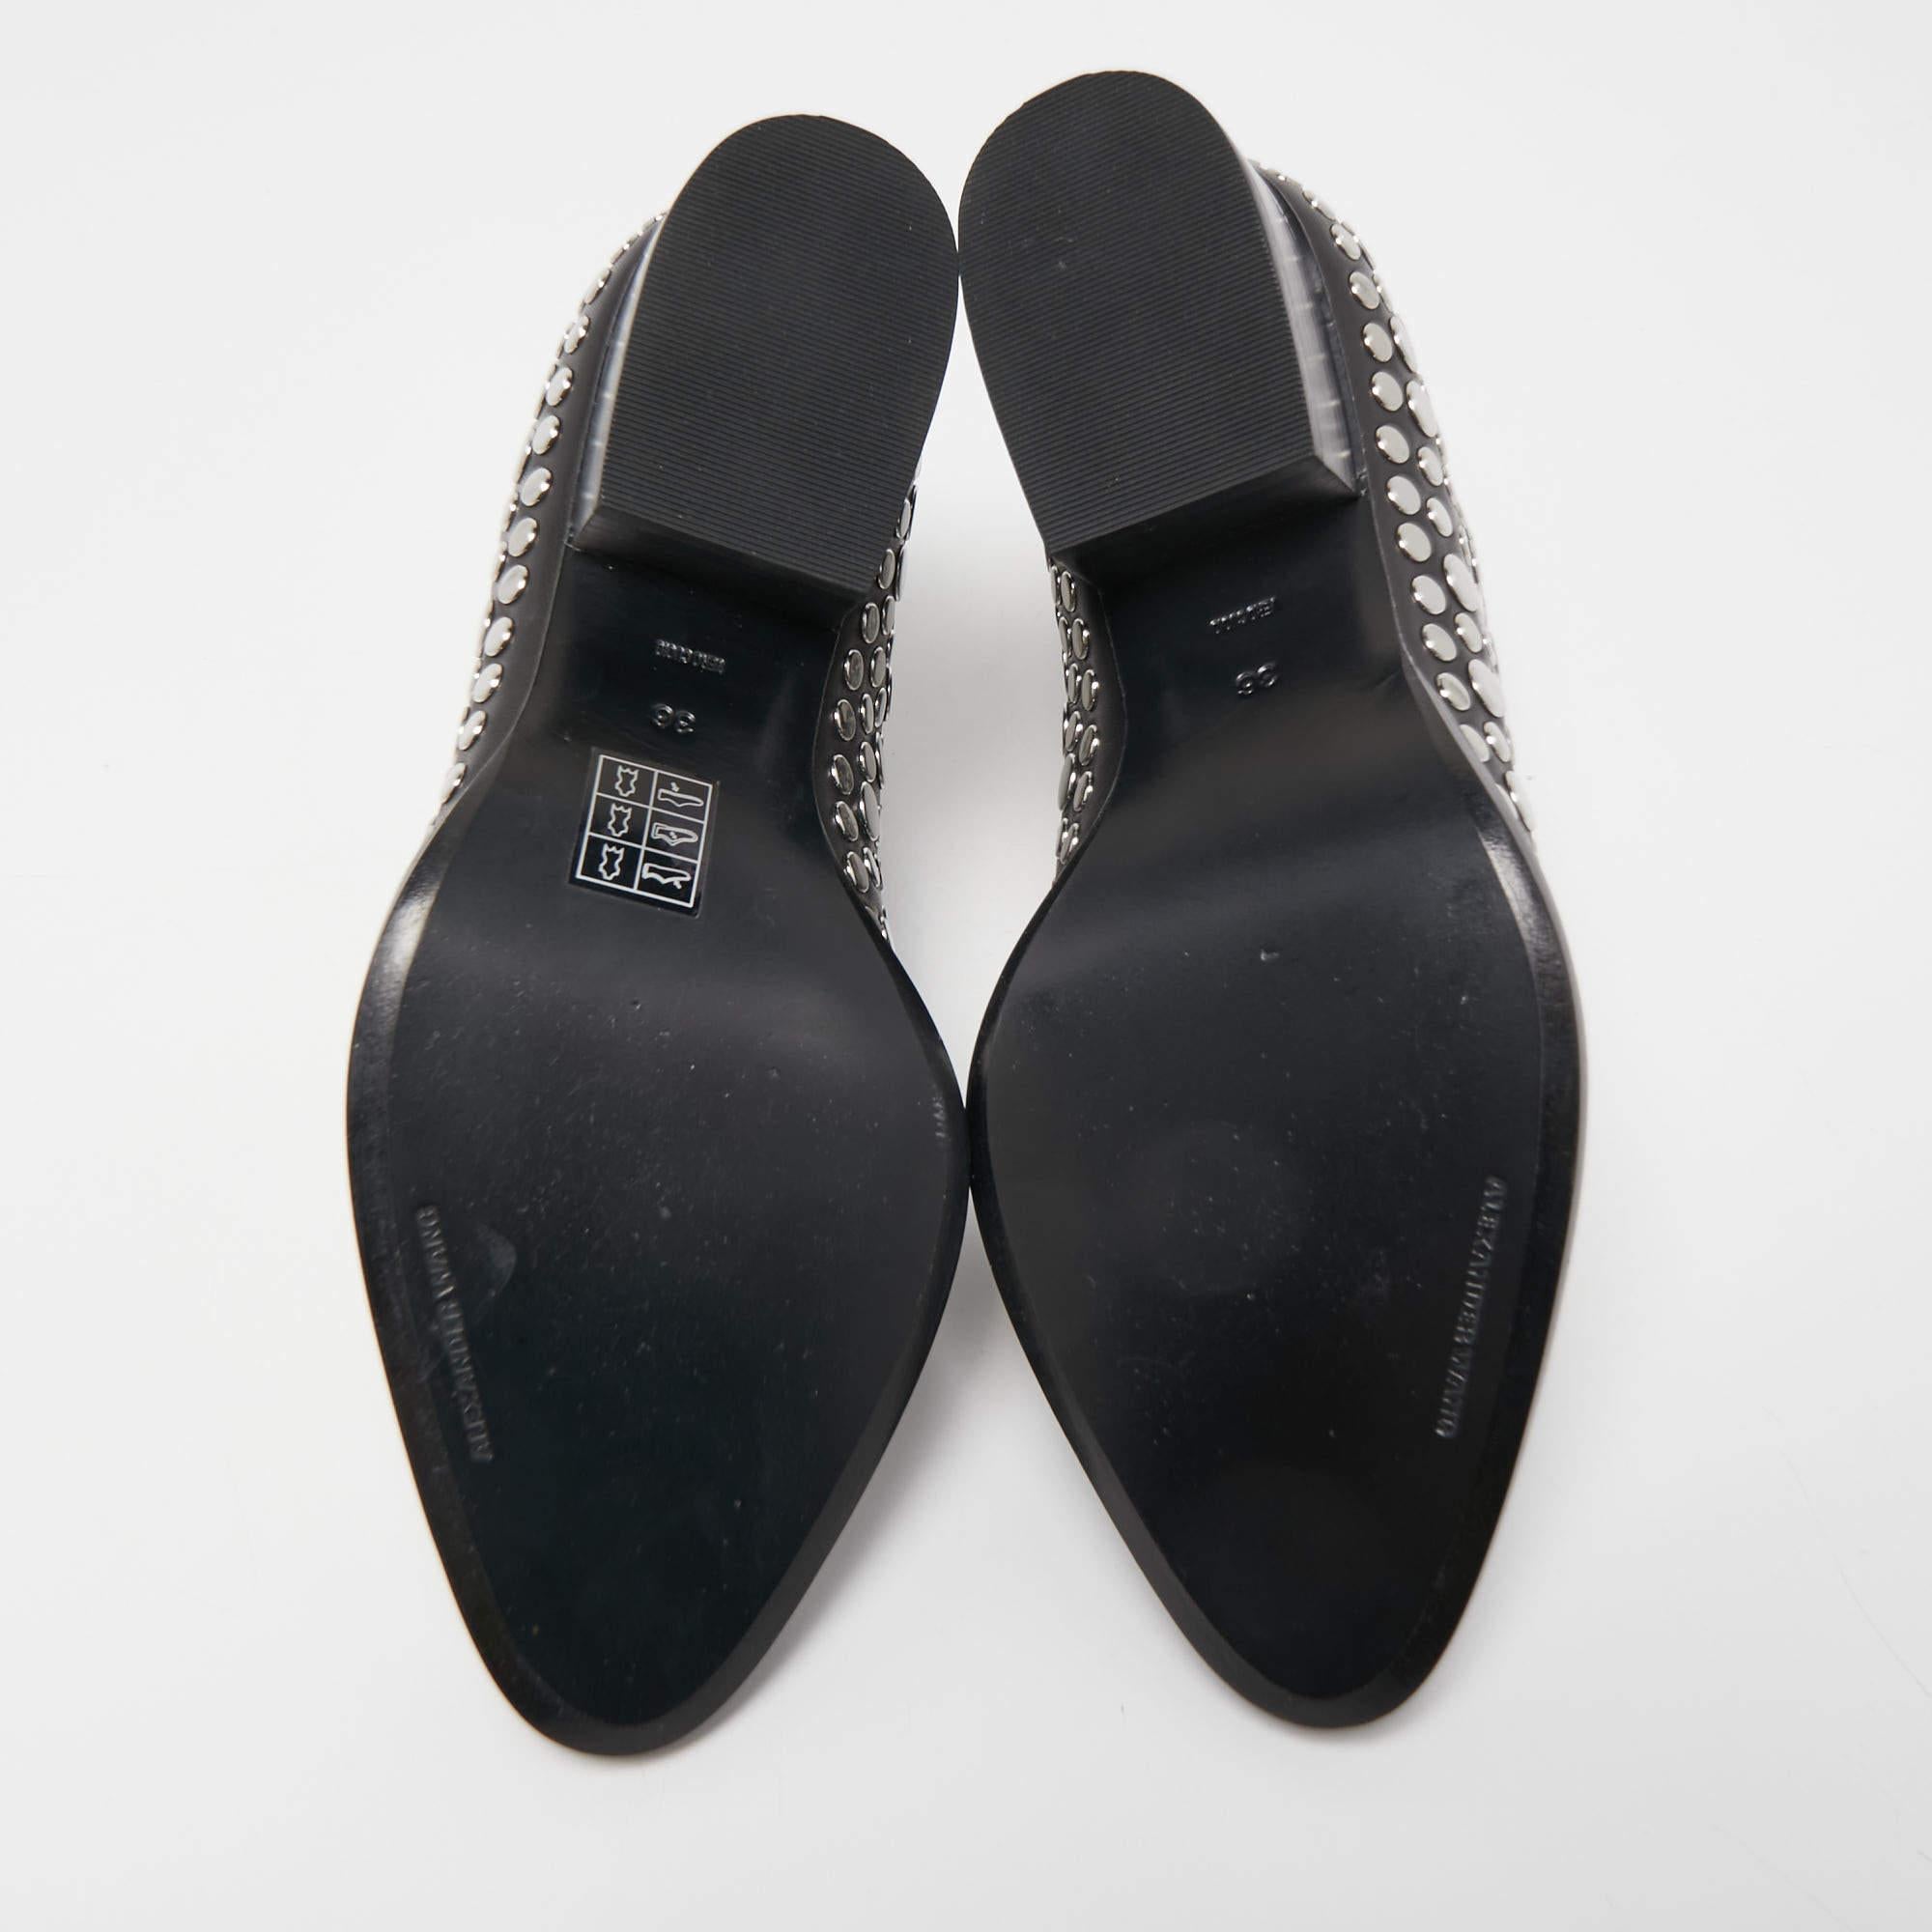 Alexander Wang Black Leather Embellished Ankle Length Boots Size 36 5